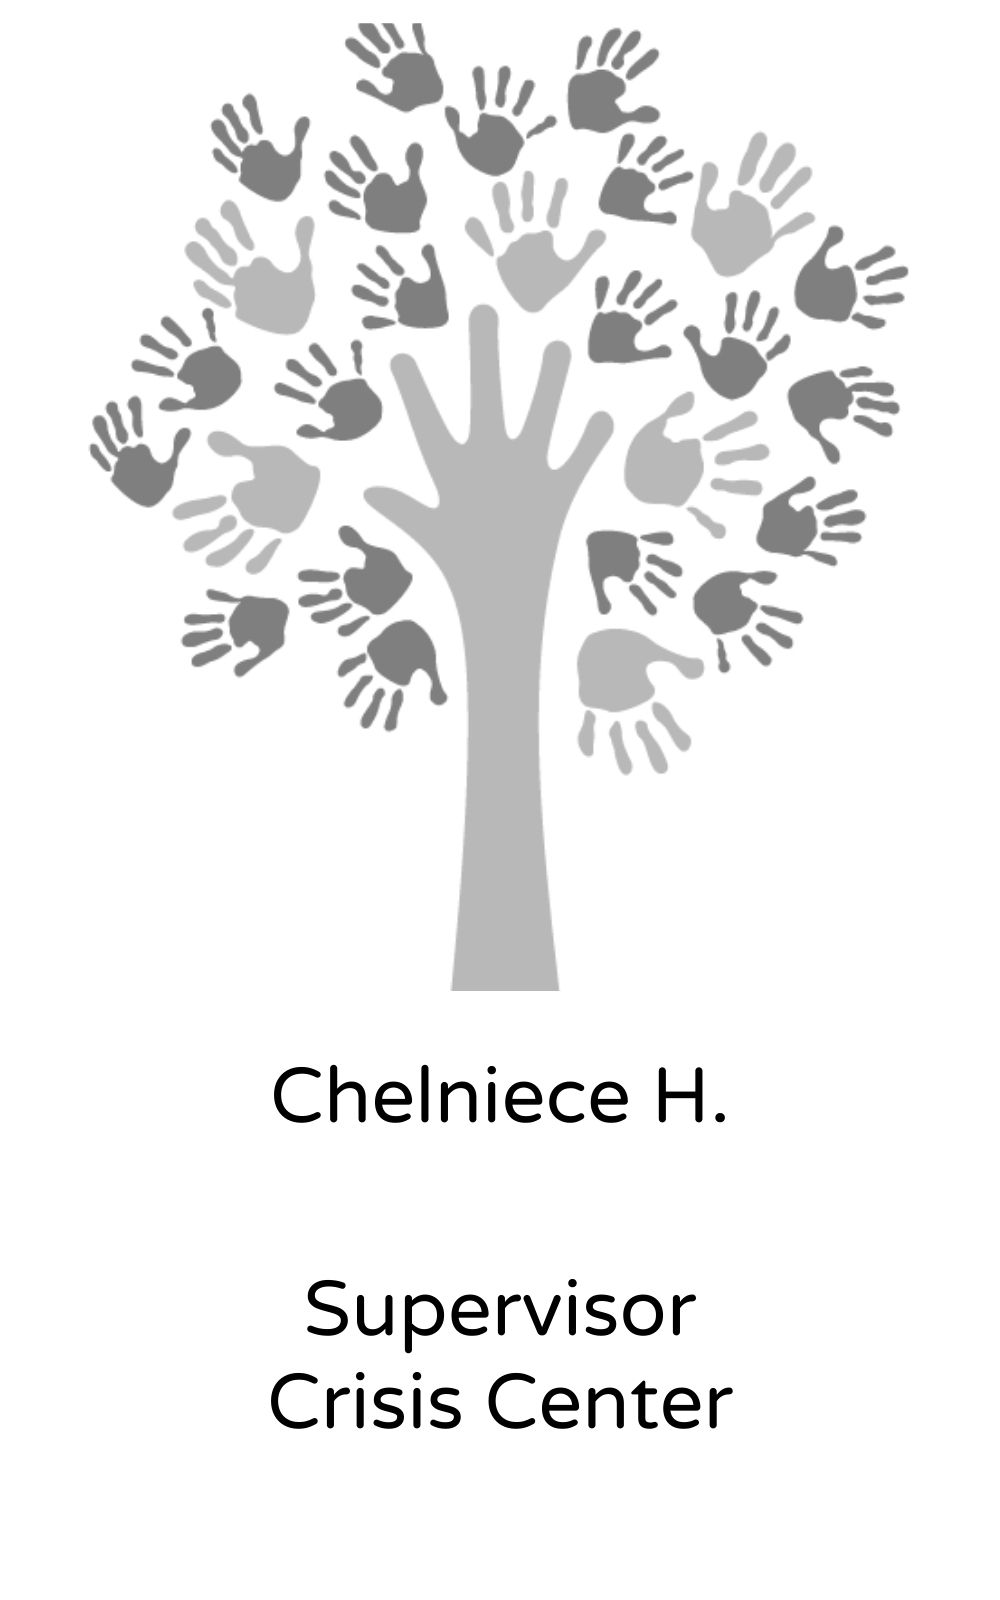 Chelniece H, Supervisor, Crisis Center